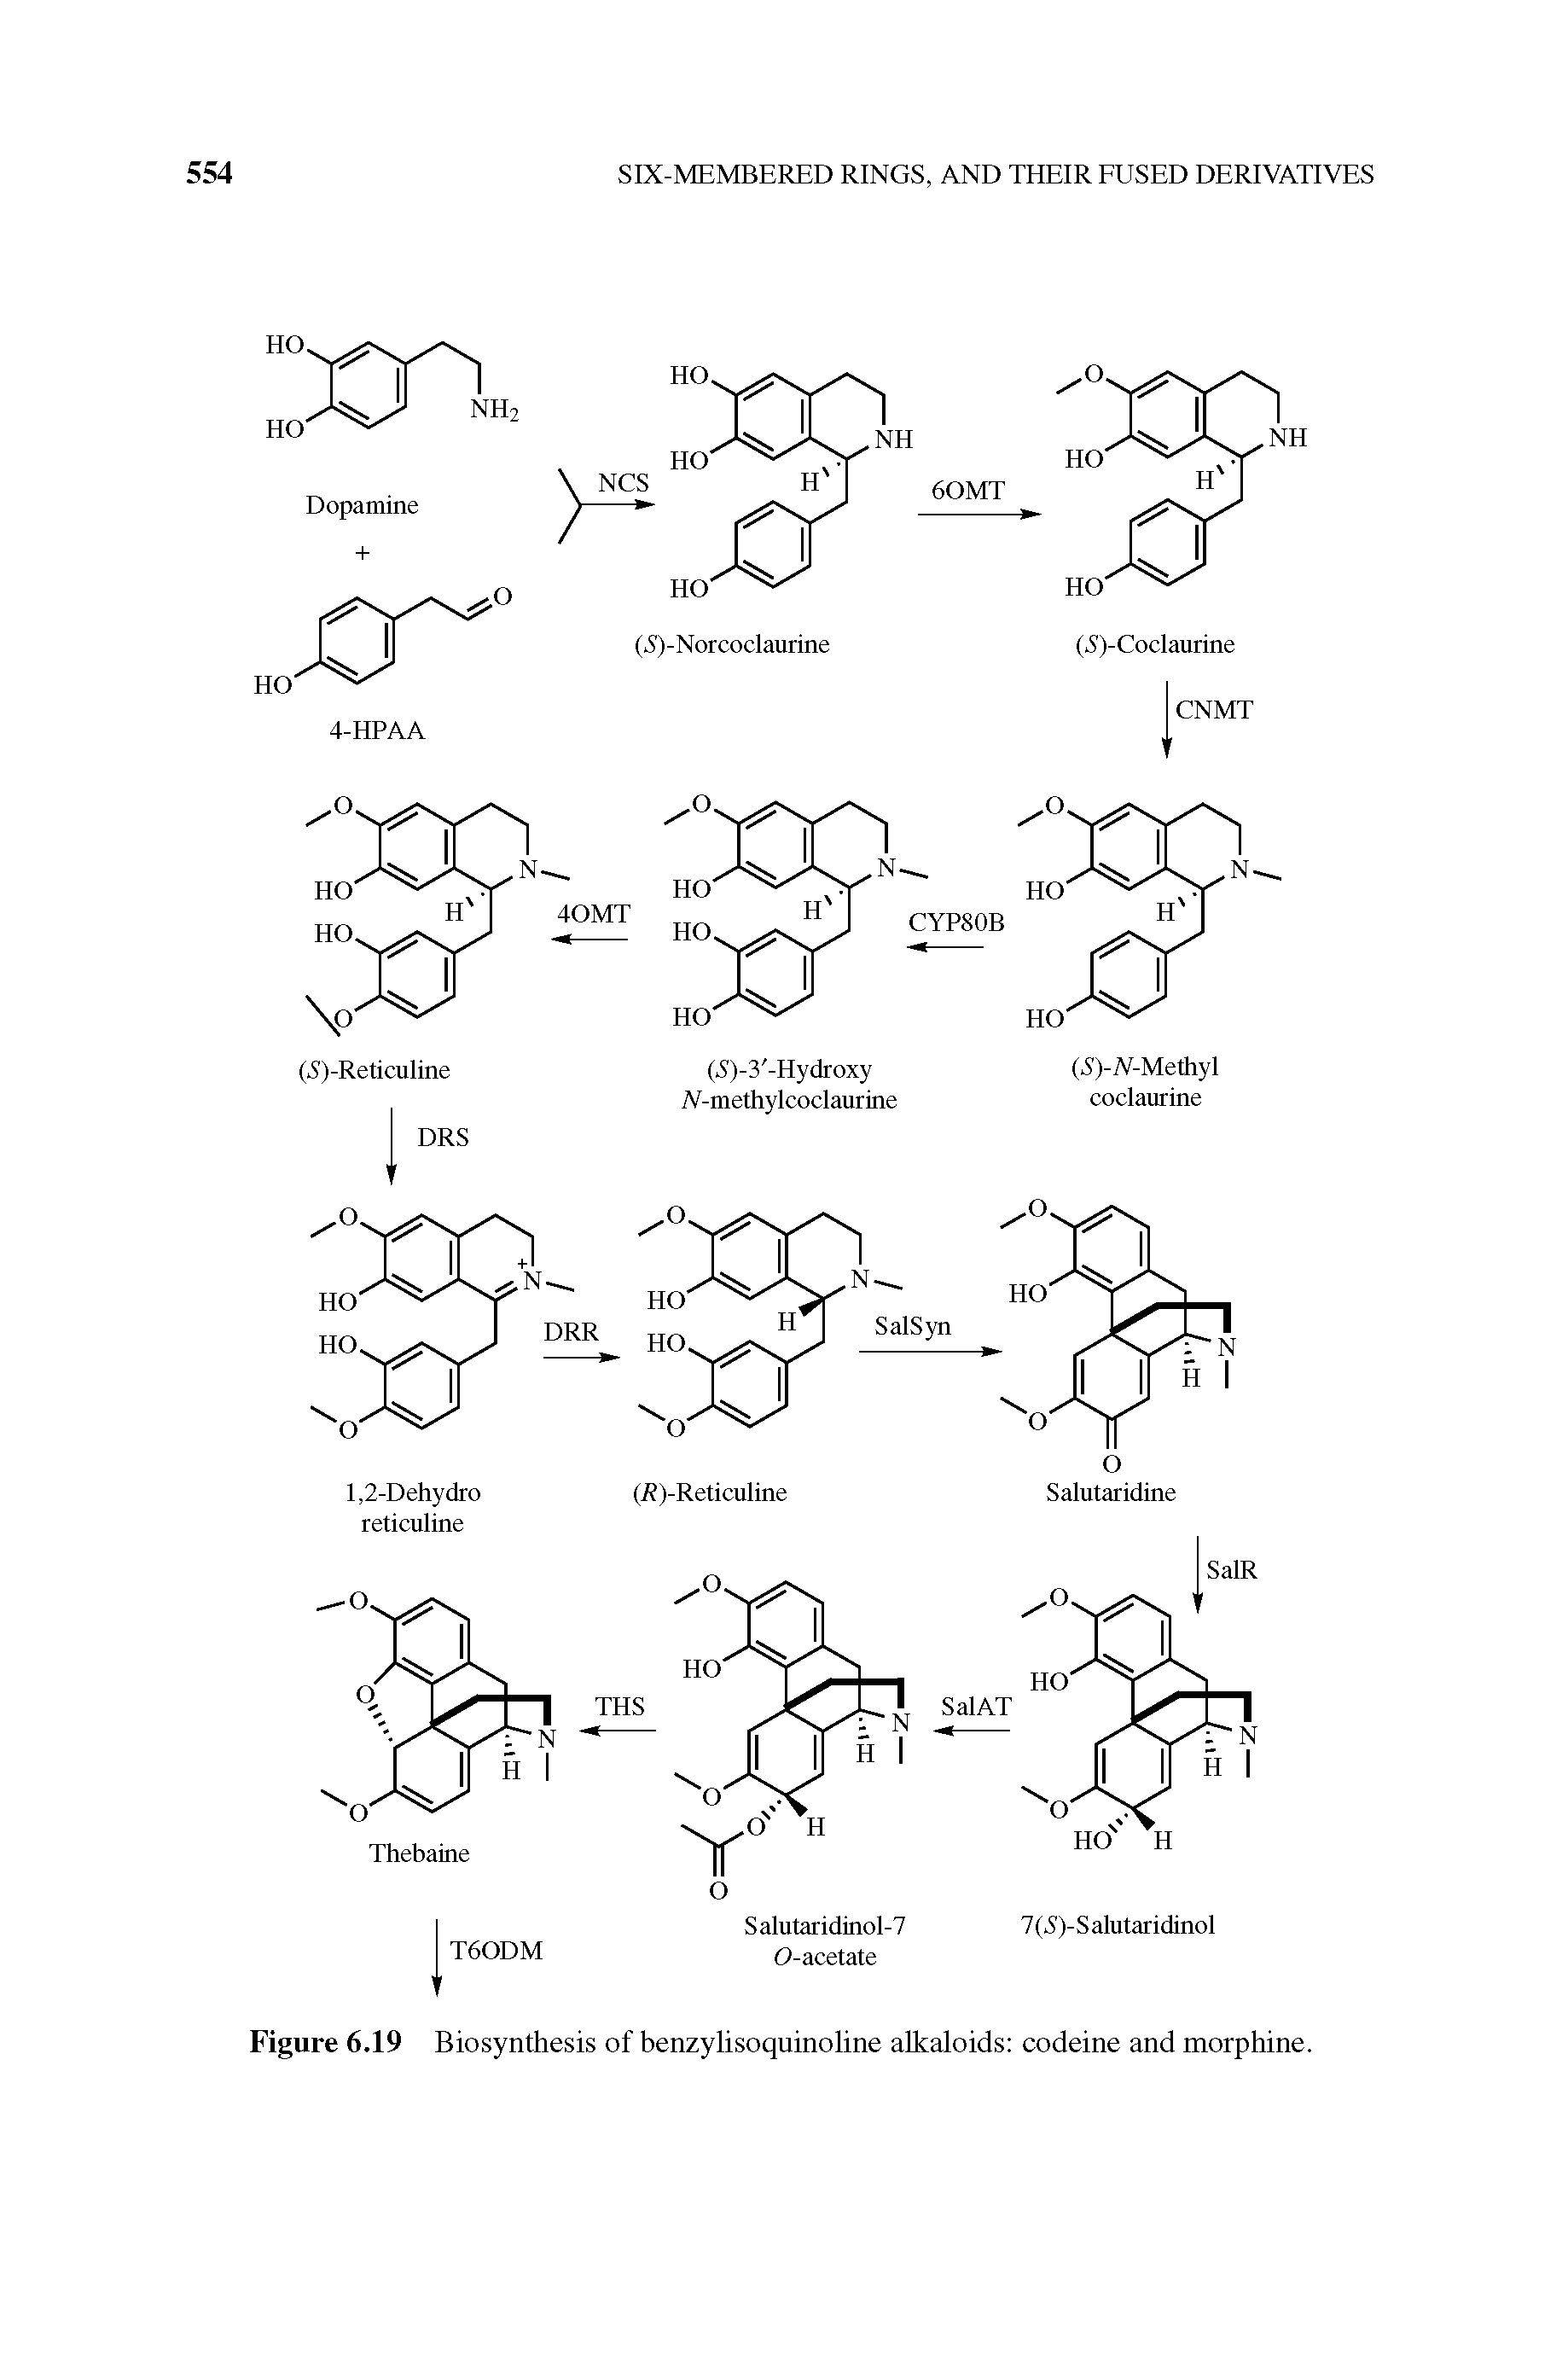 Figure 6.19 Biosynthesis of benzylisoquinoline alkaloids codeine and morphine.